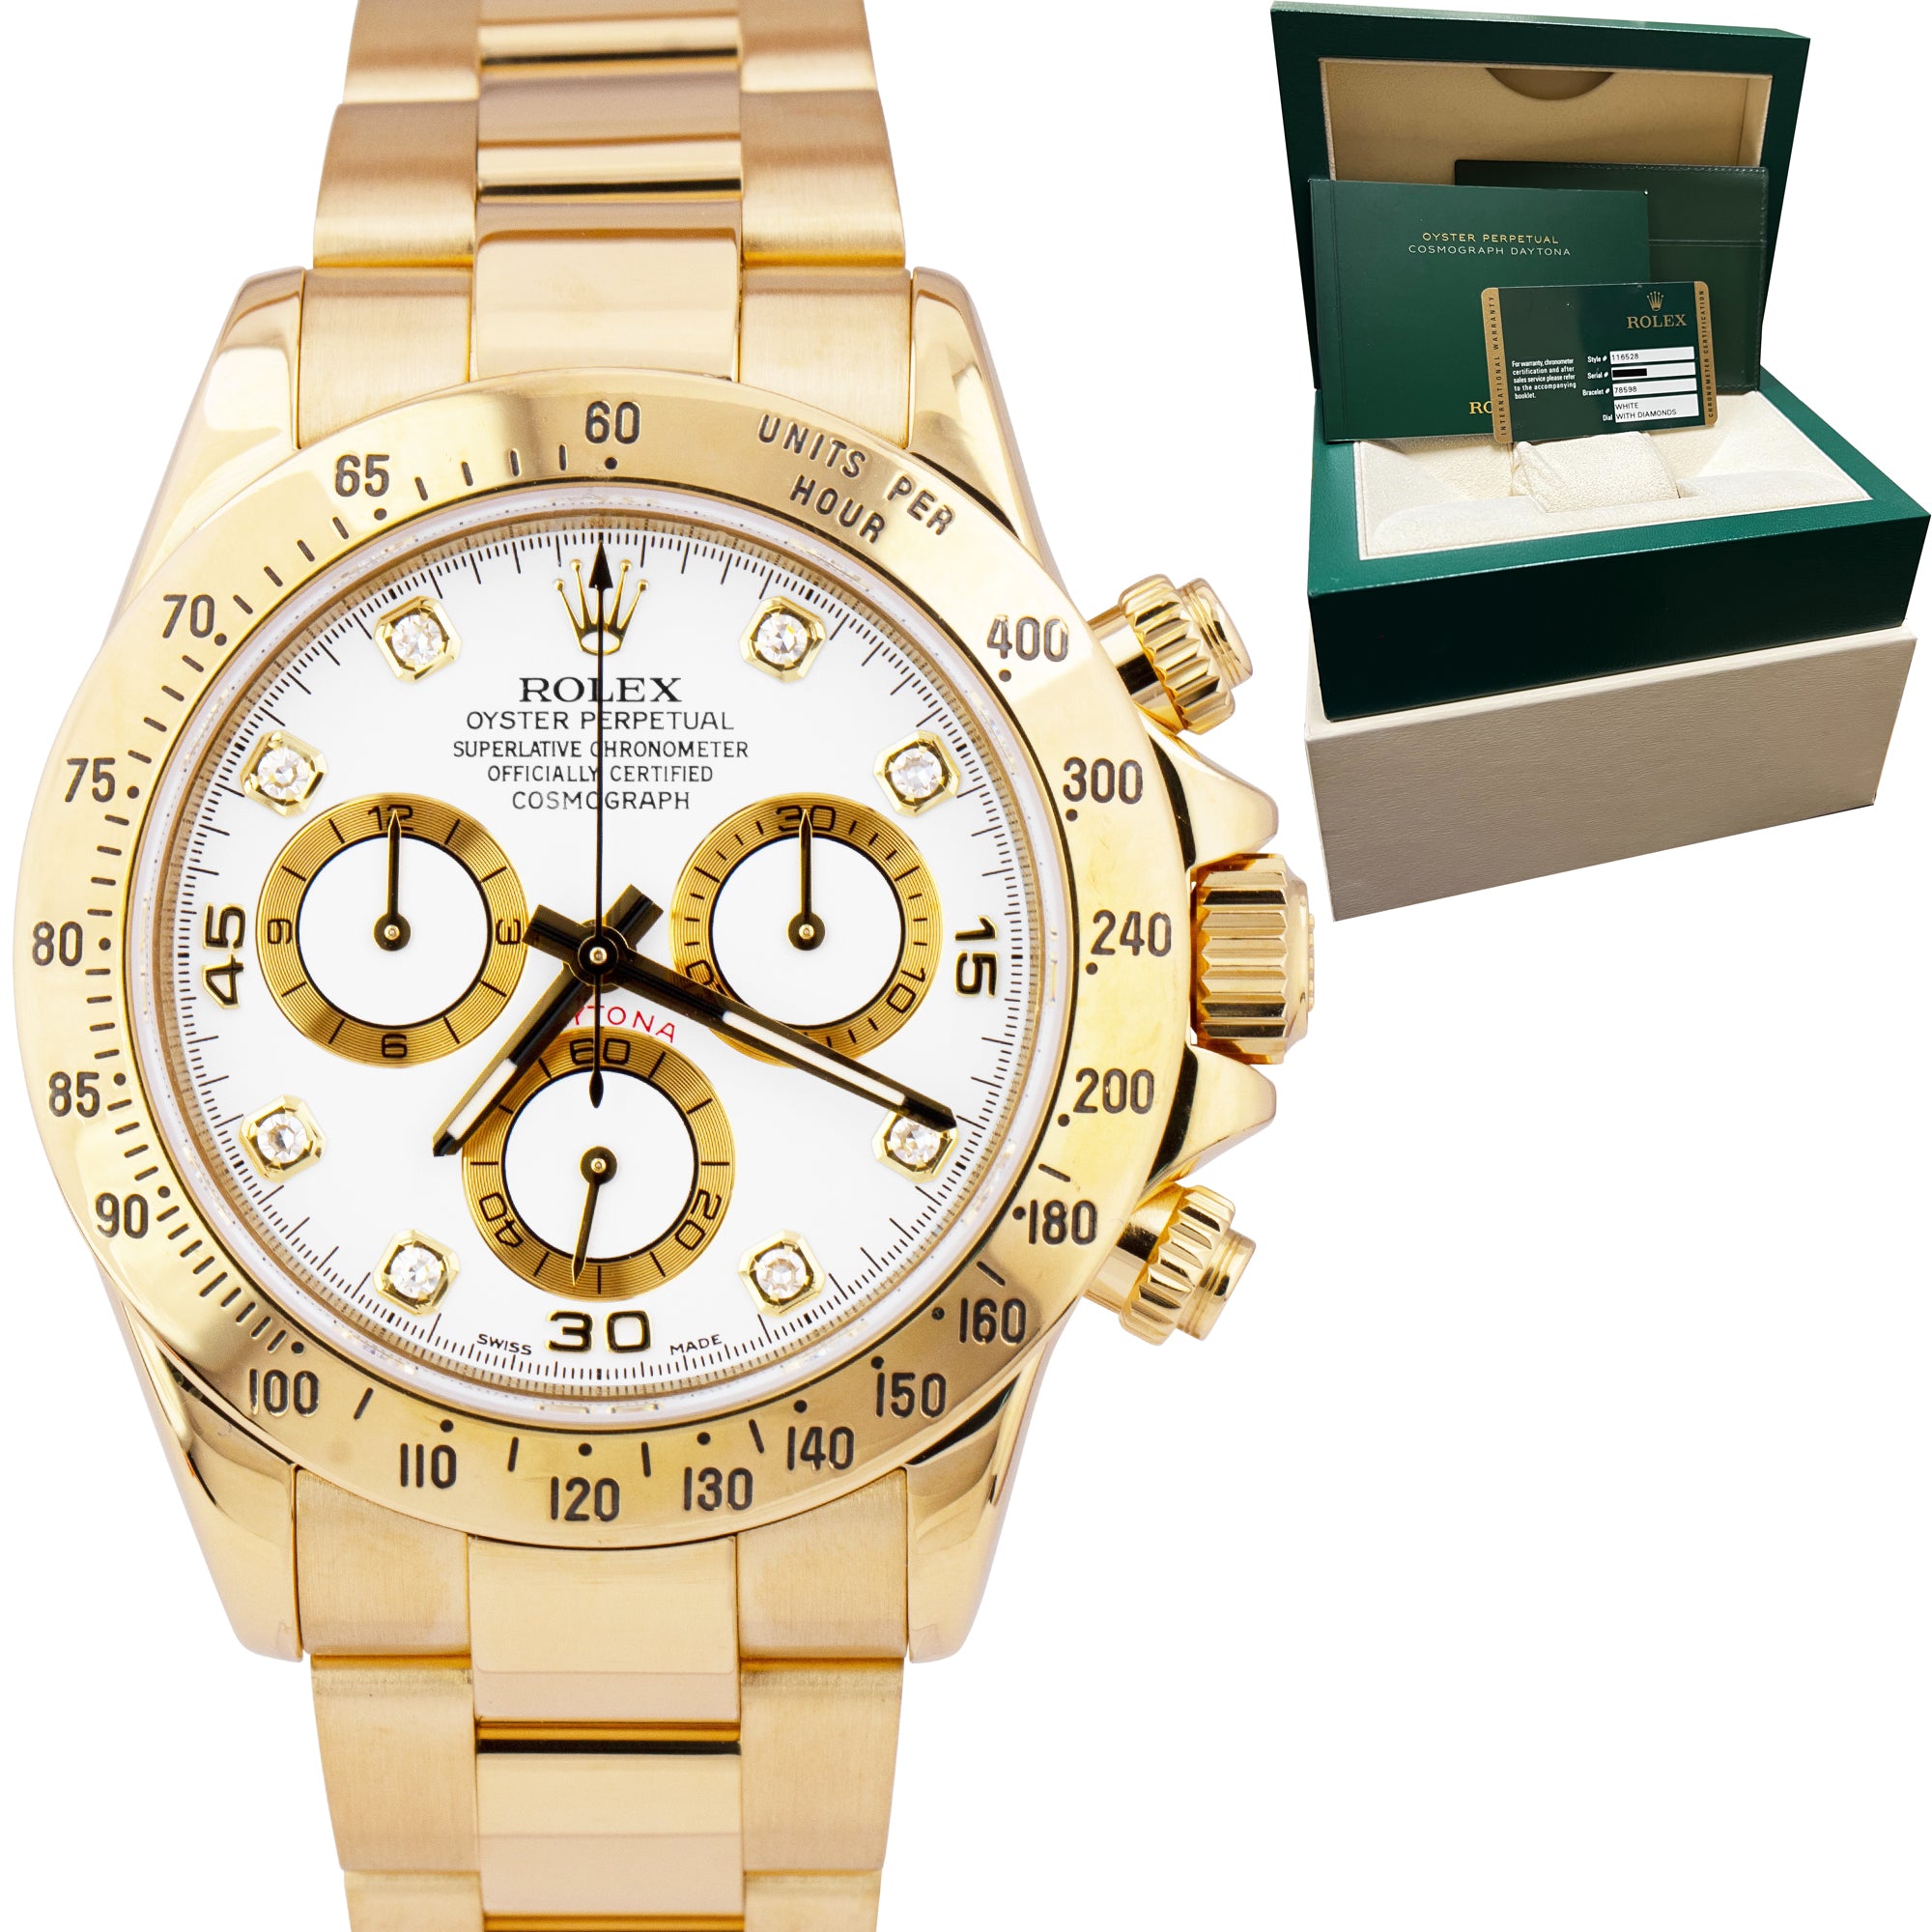 2014 Rolex Daytona 40mm White DIAMOND 18K Gold Chronograph Watch 116528 PAPERS